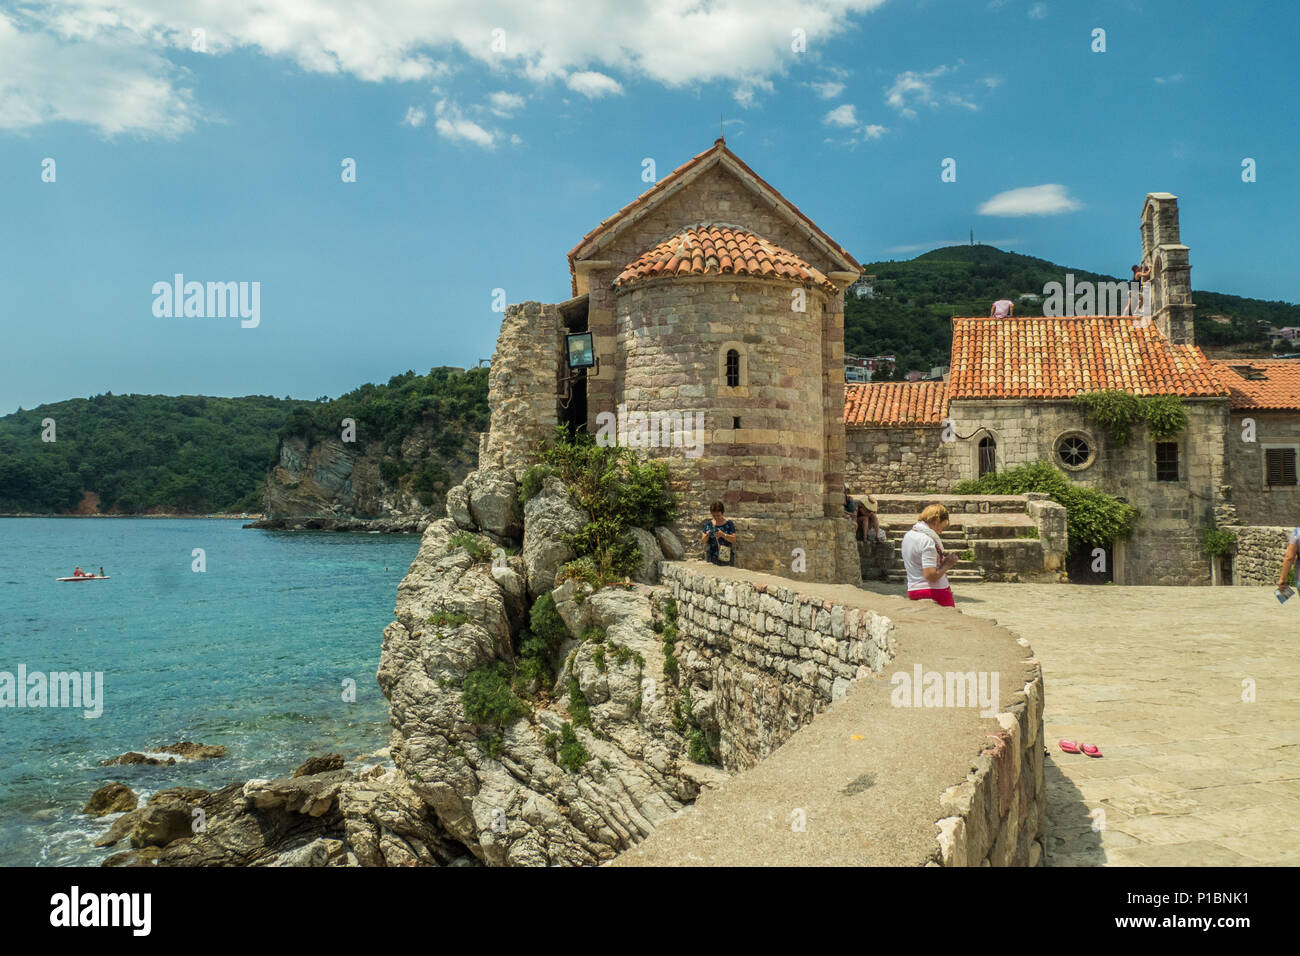 Budva, a town in Montenegro on the Adriatic coastline Stock Photo